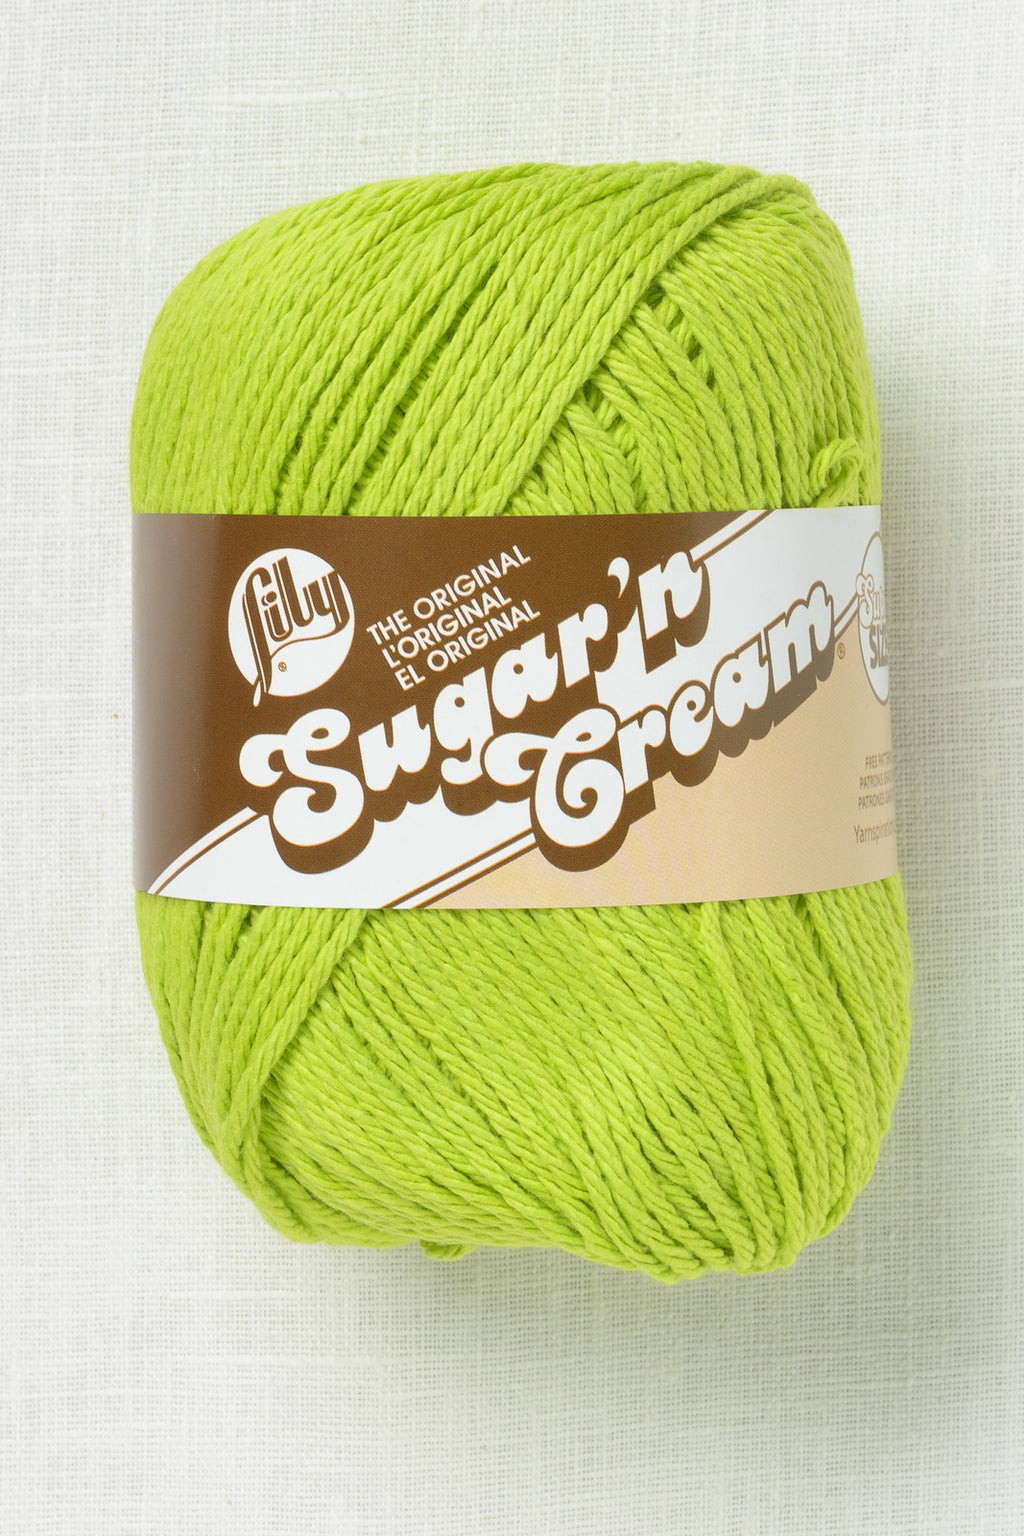 Lily Sugar n' Cream Super Size Hot Green